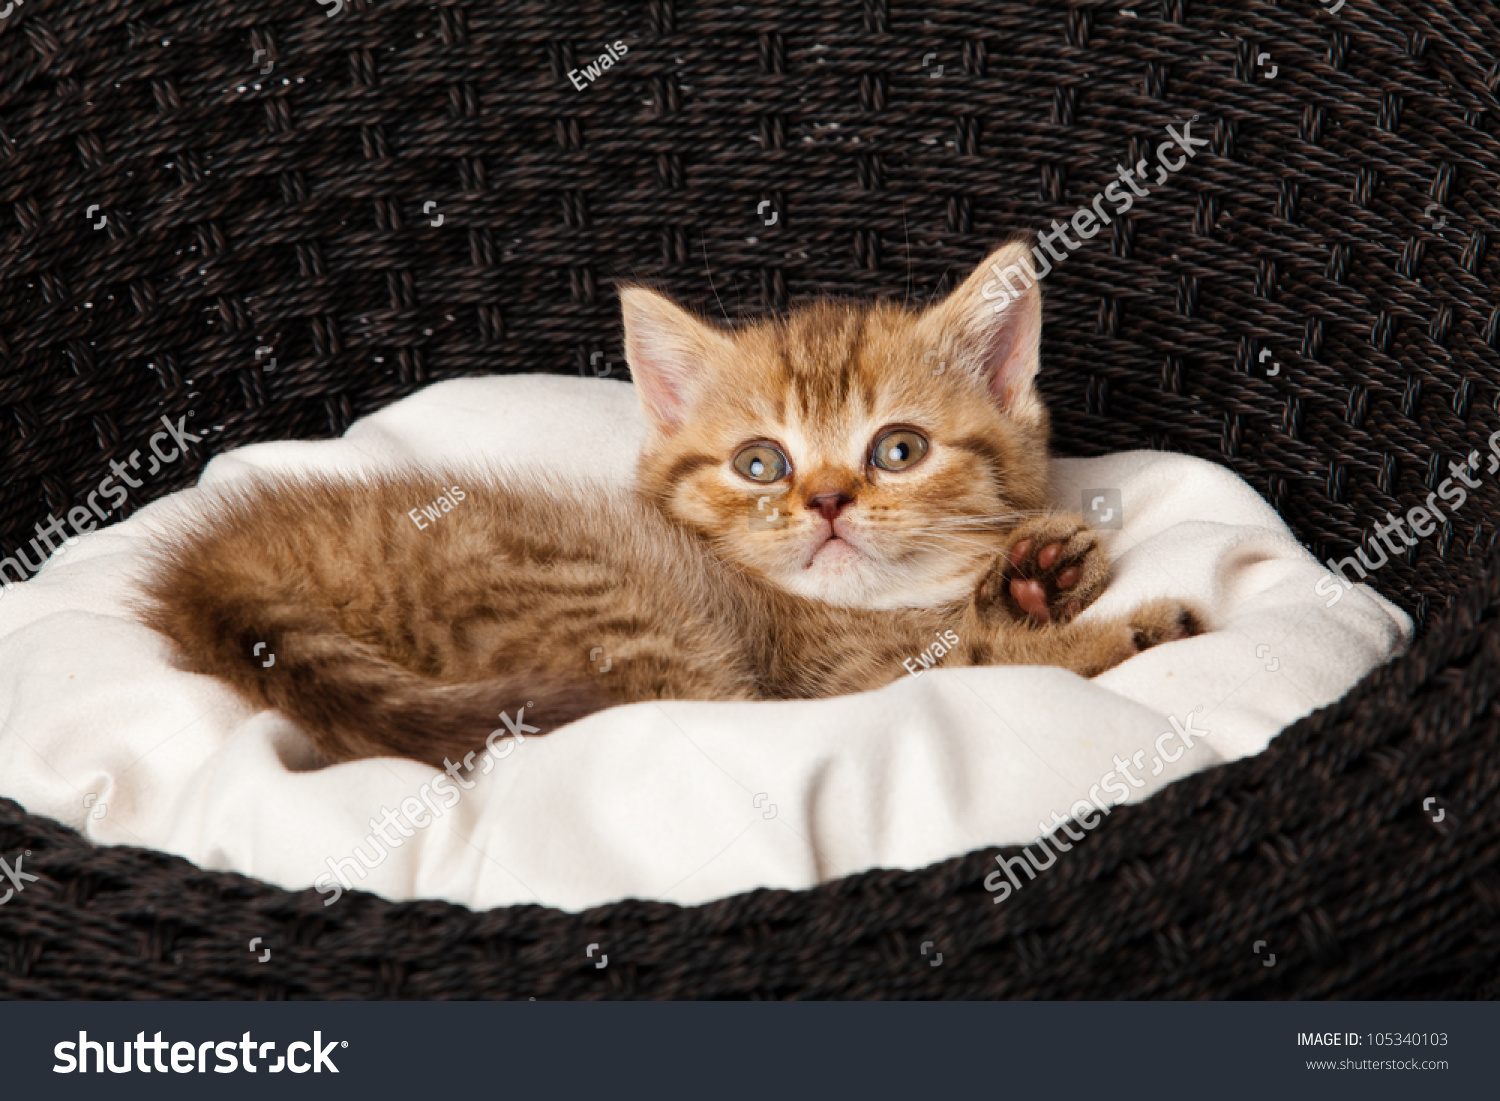 Cat Sleeping In The Basket Stock Photo 105340103 : Shutterstock